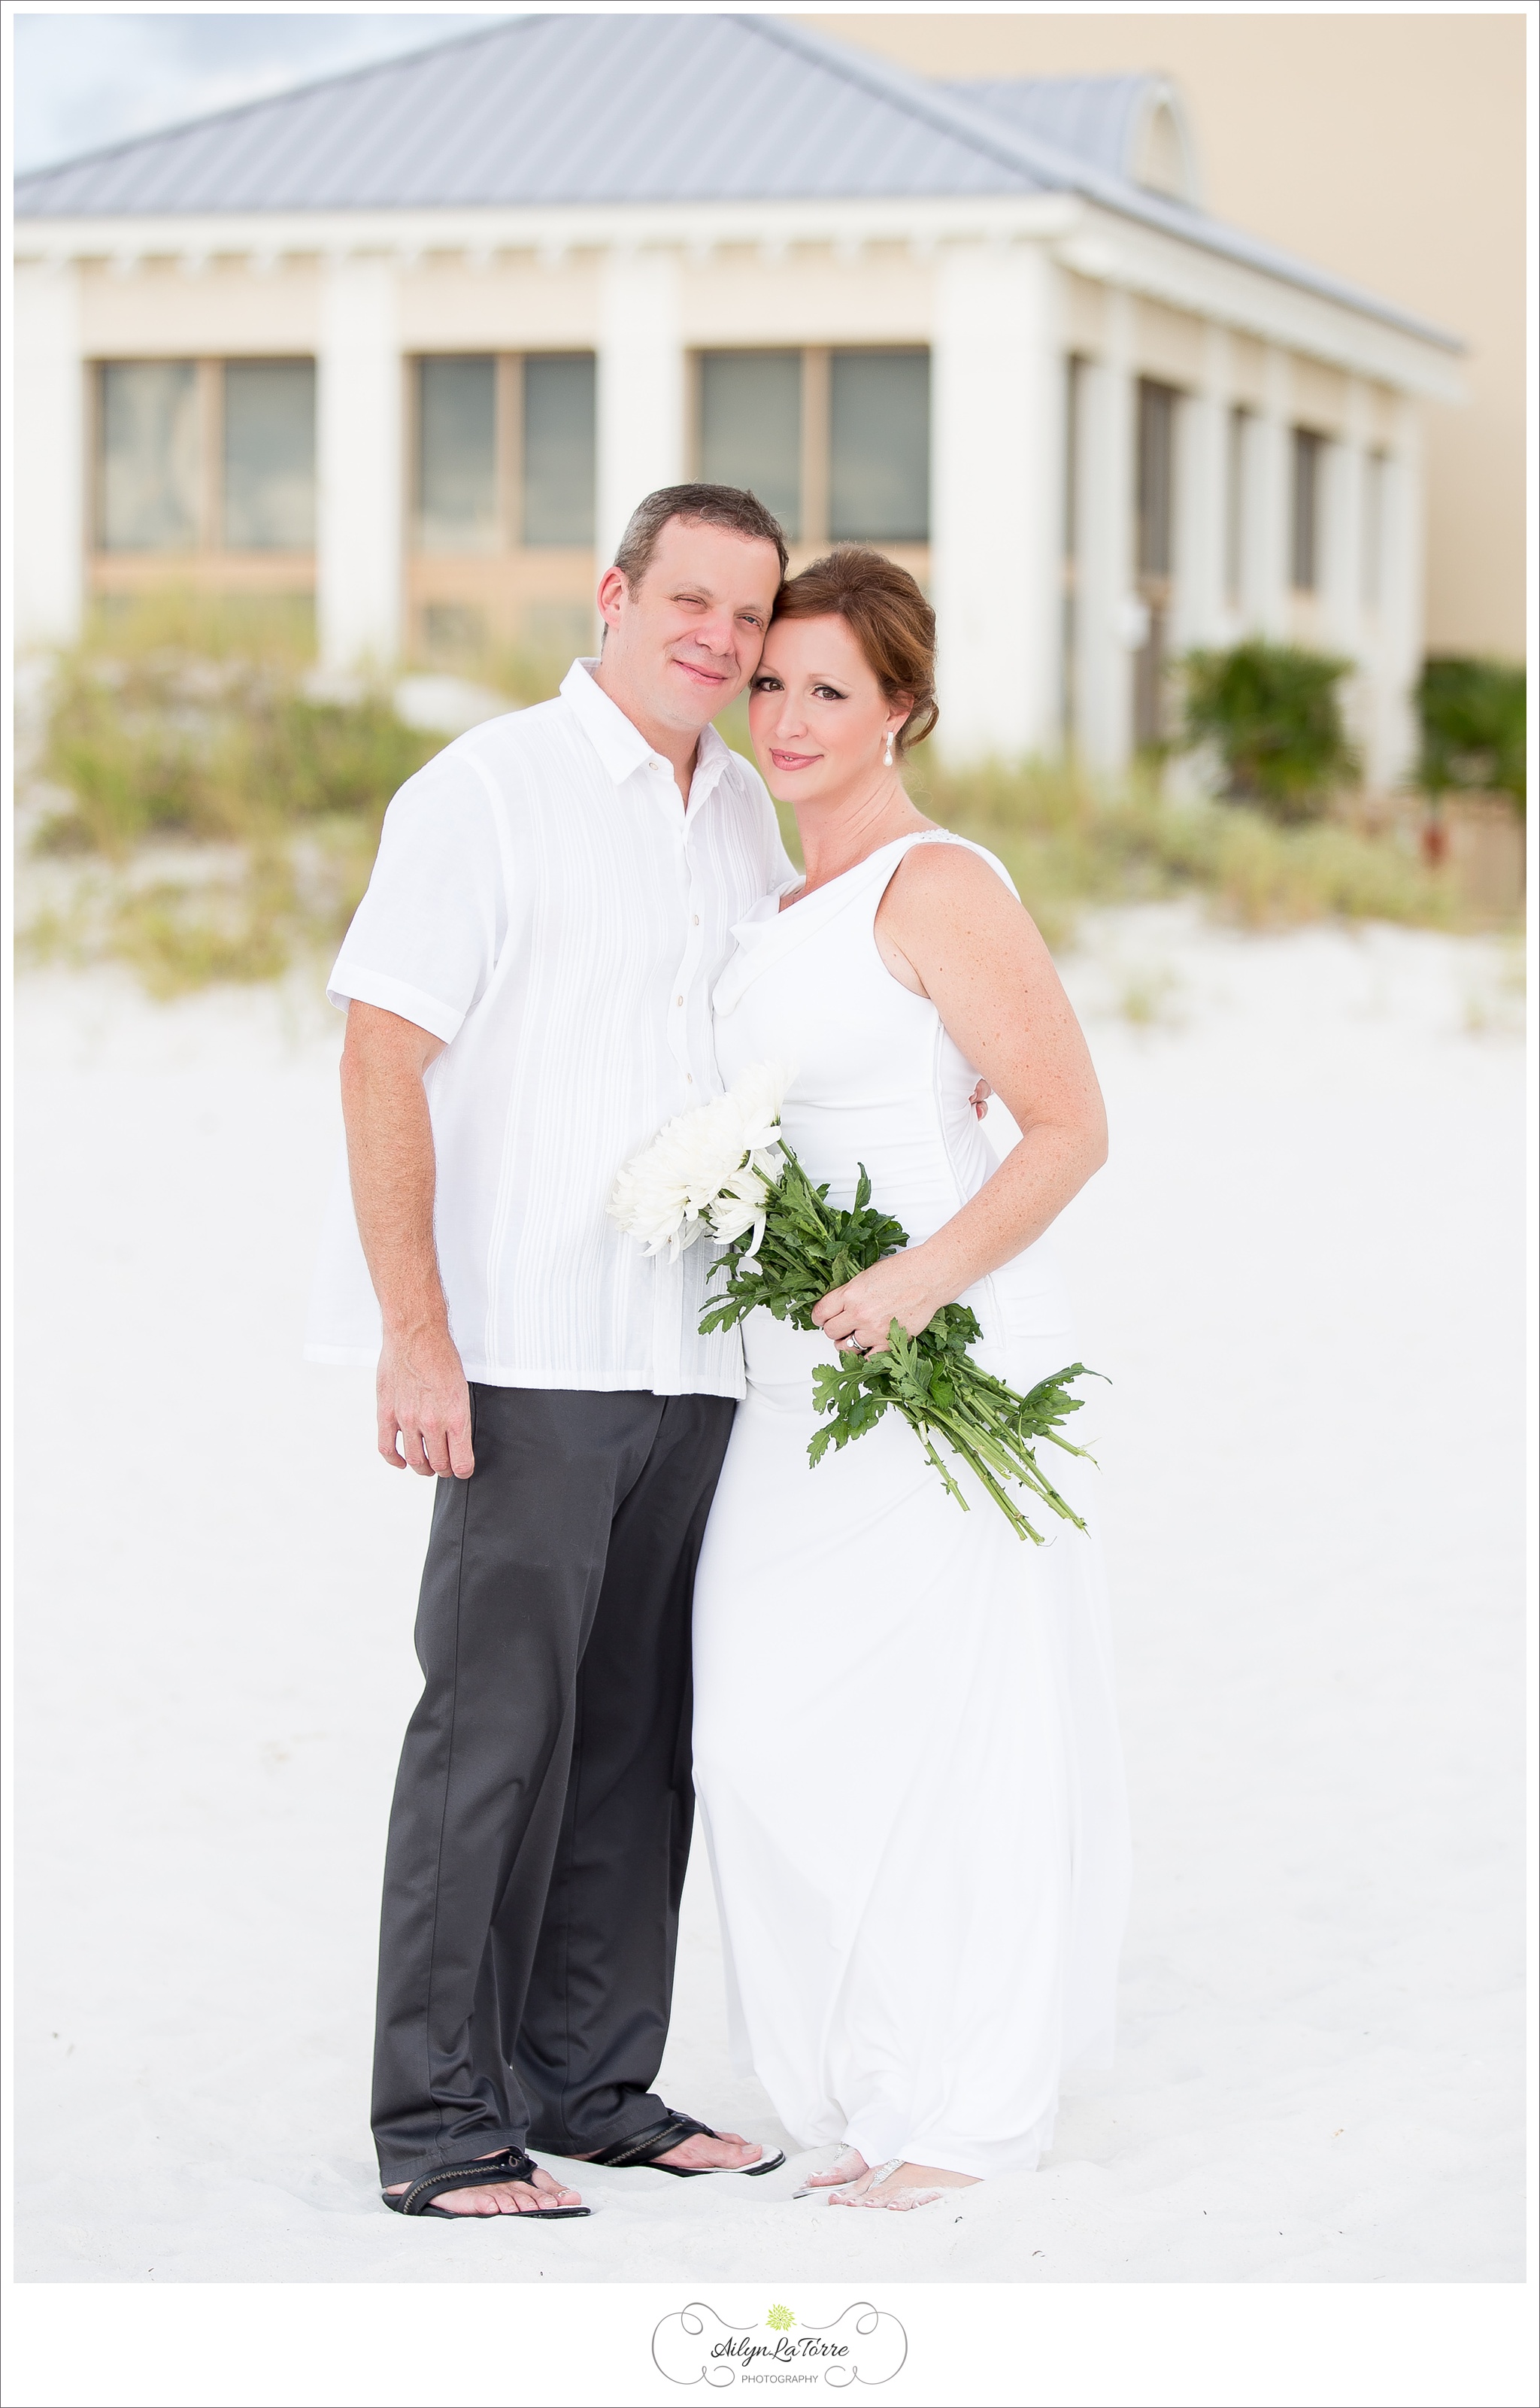 Sandpearl Beach Wedding | © Ailyn La Torre Photography 2014